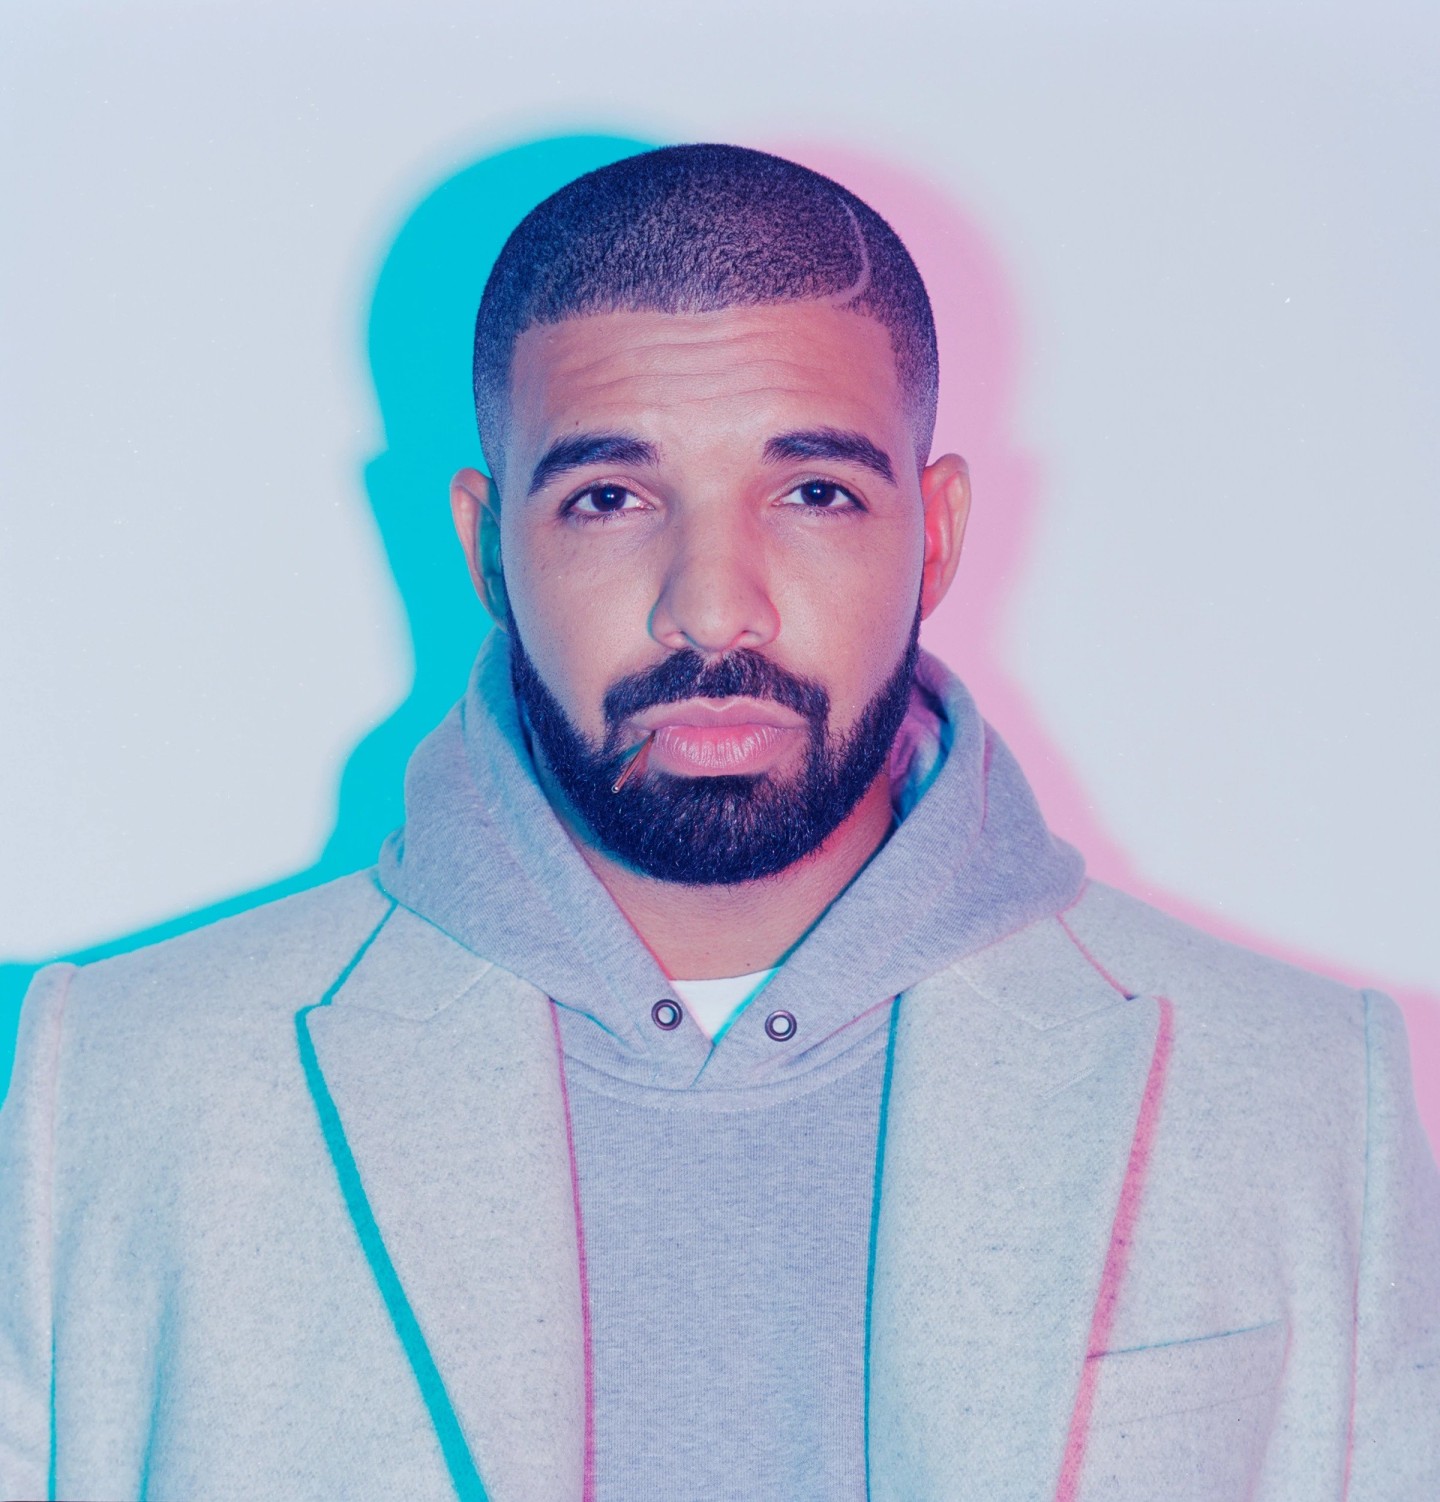 The Best Drake Songs